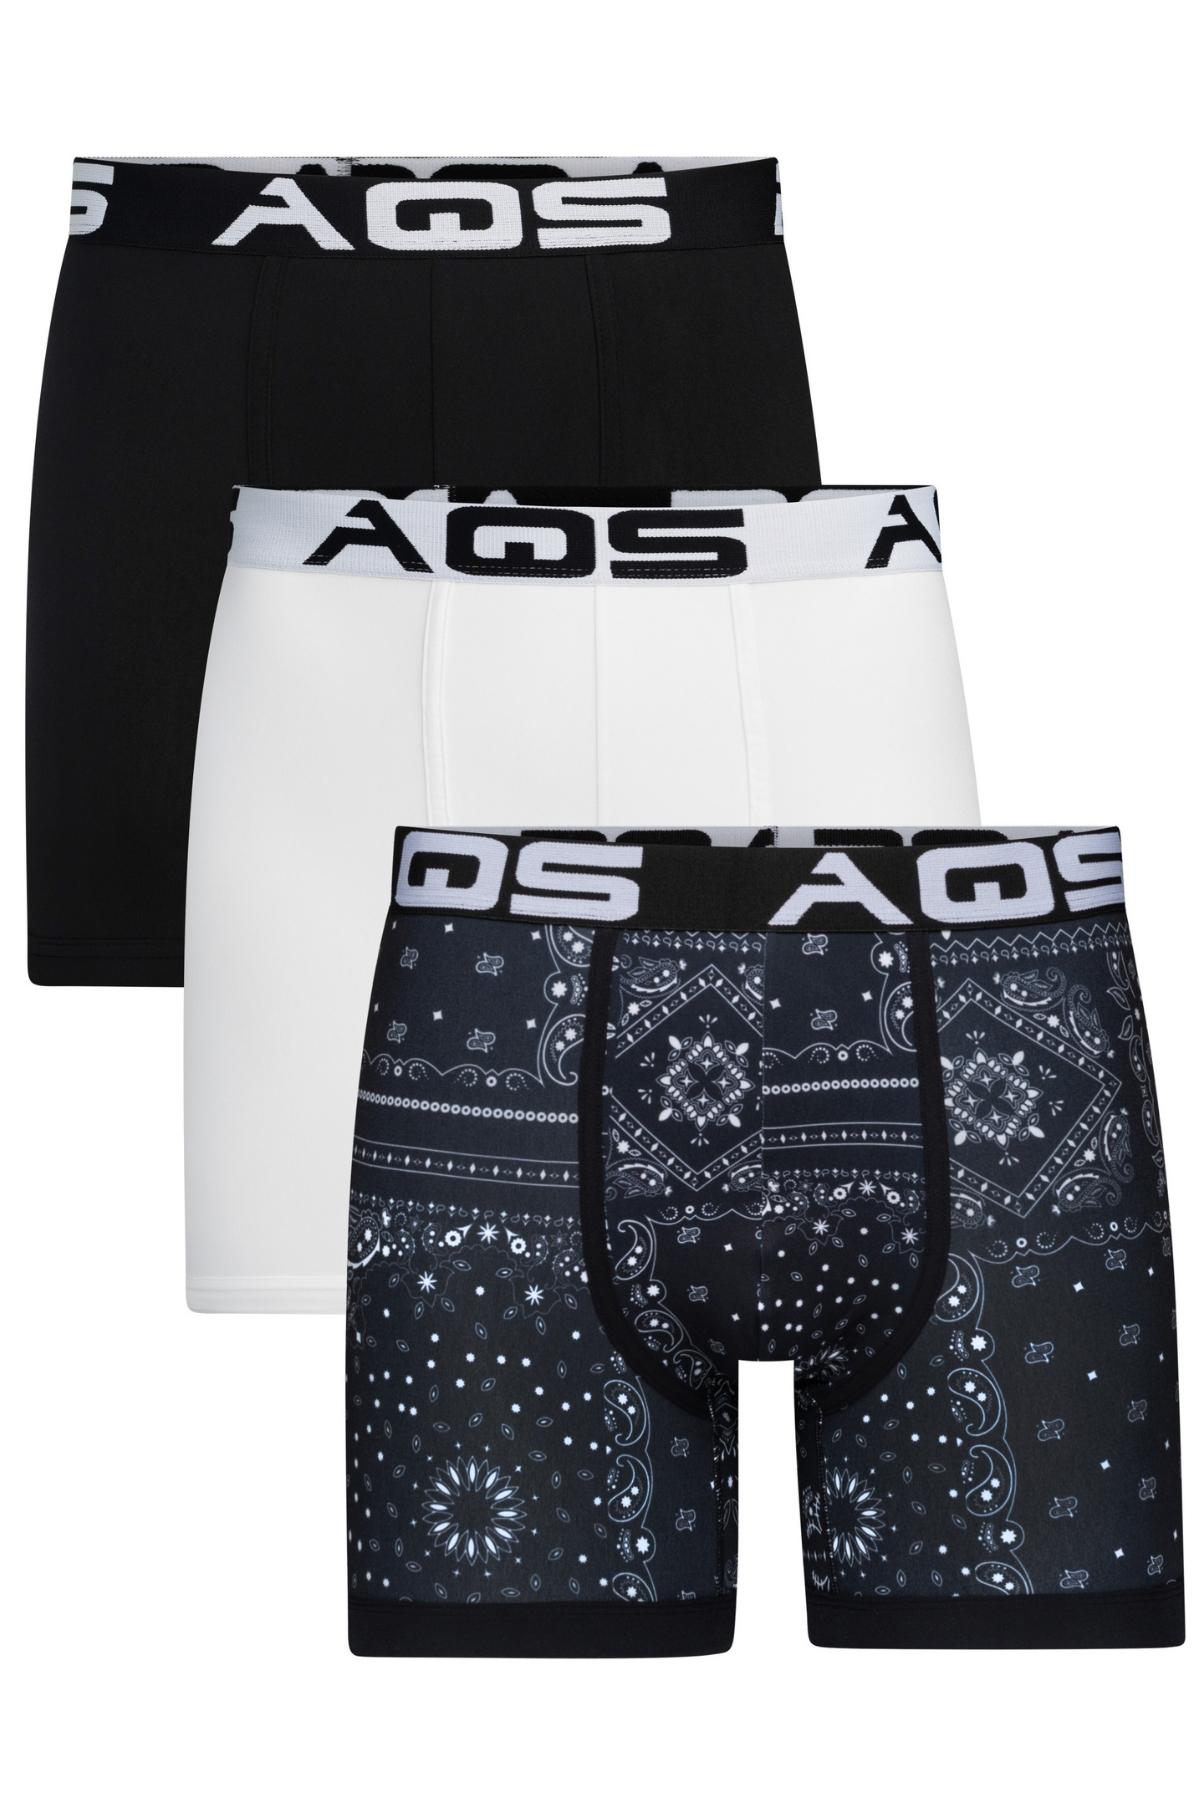 AQS Black Bandana/White/Black Boxer Brief 3-Pack